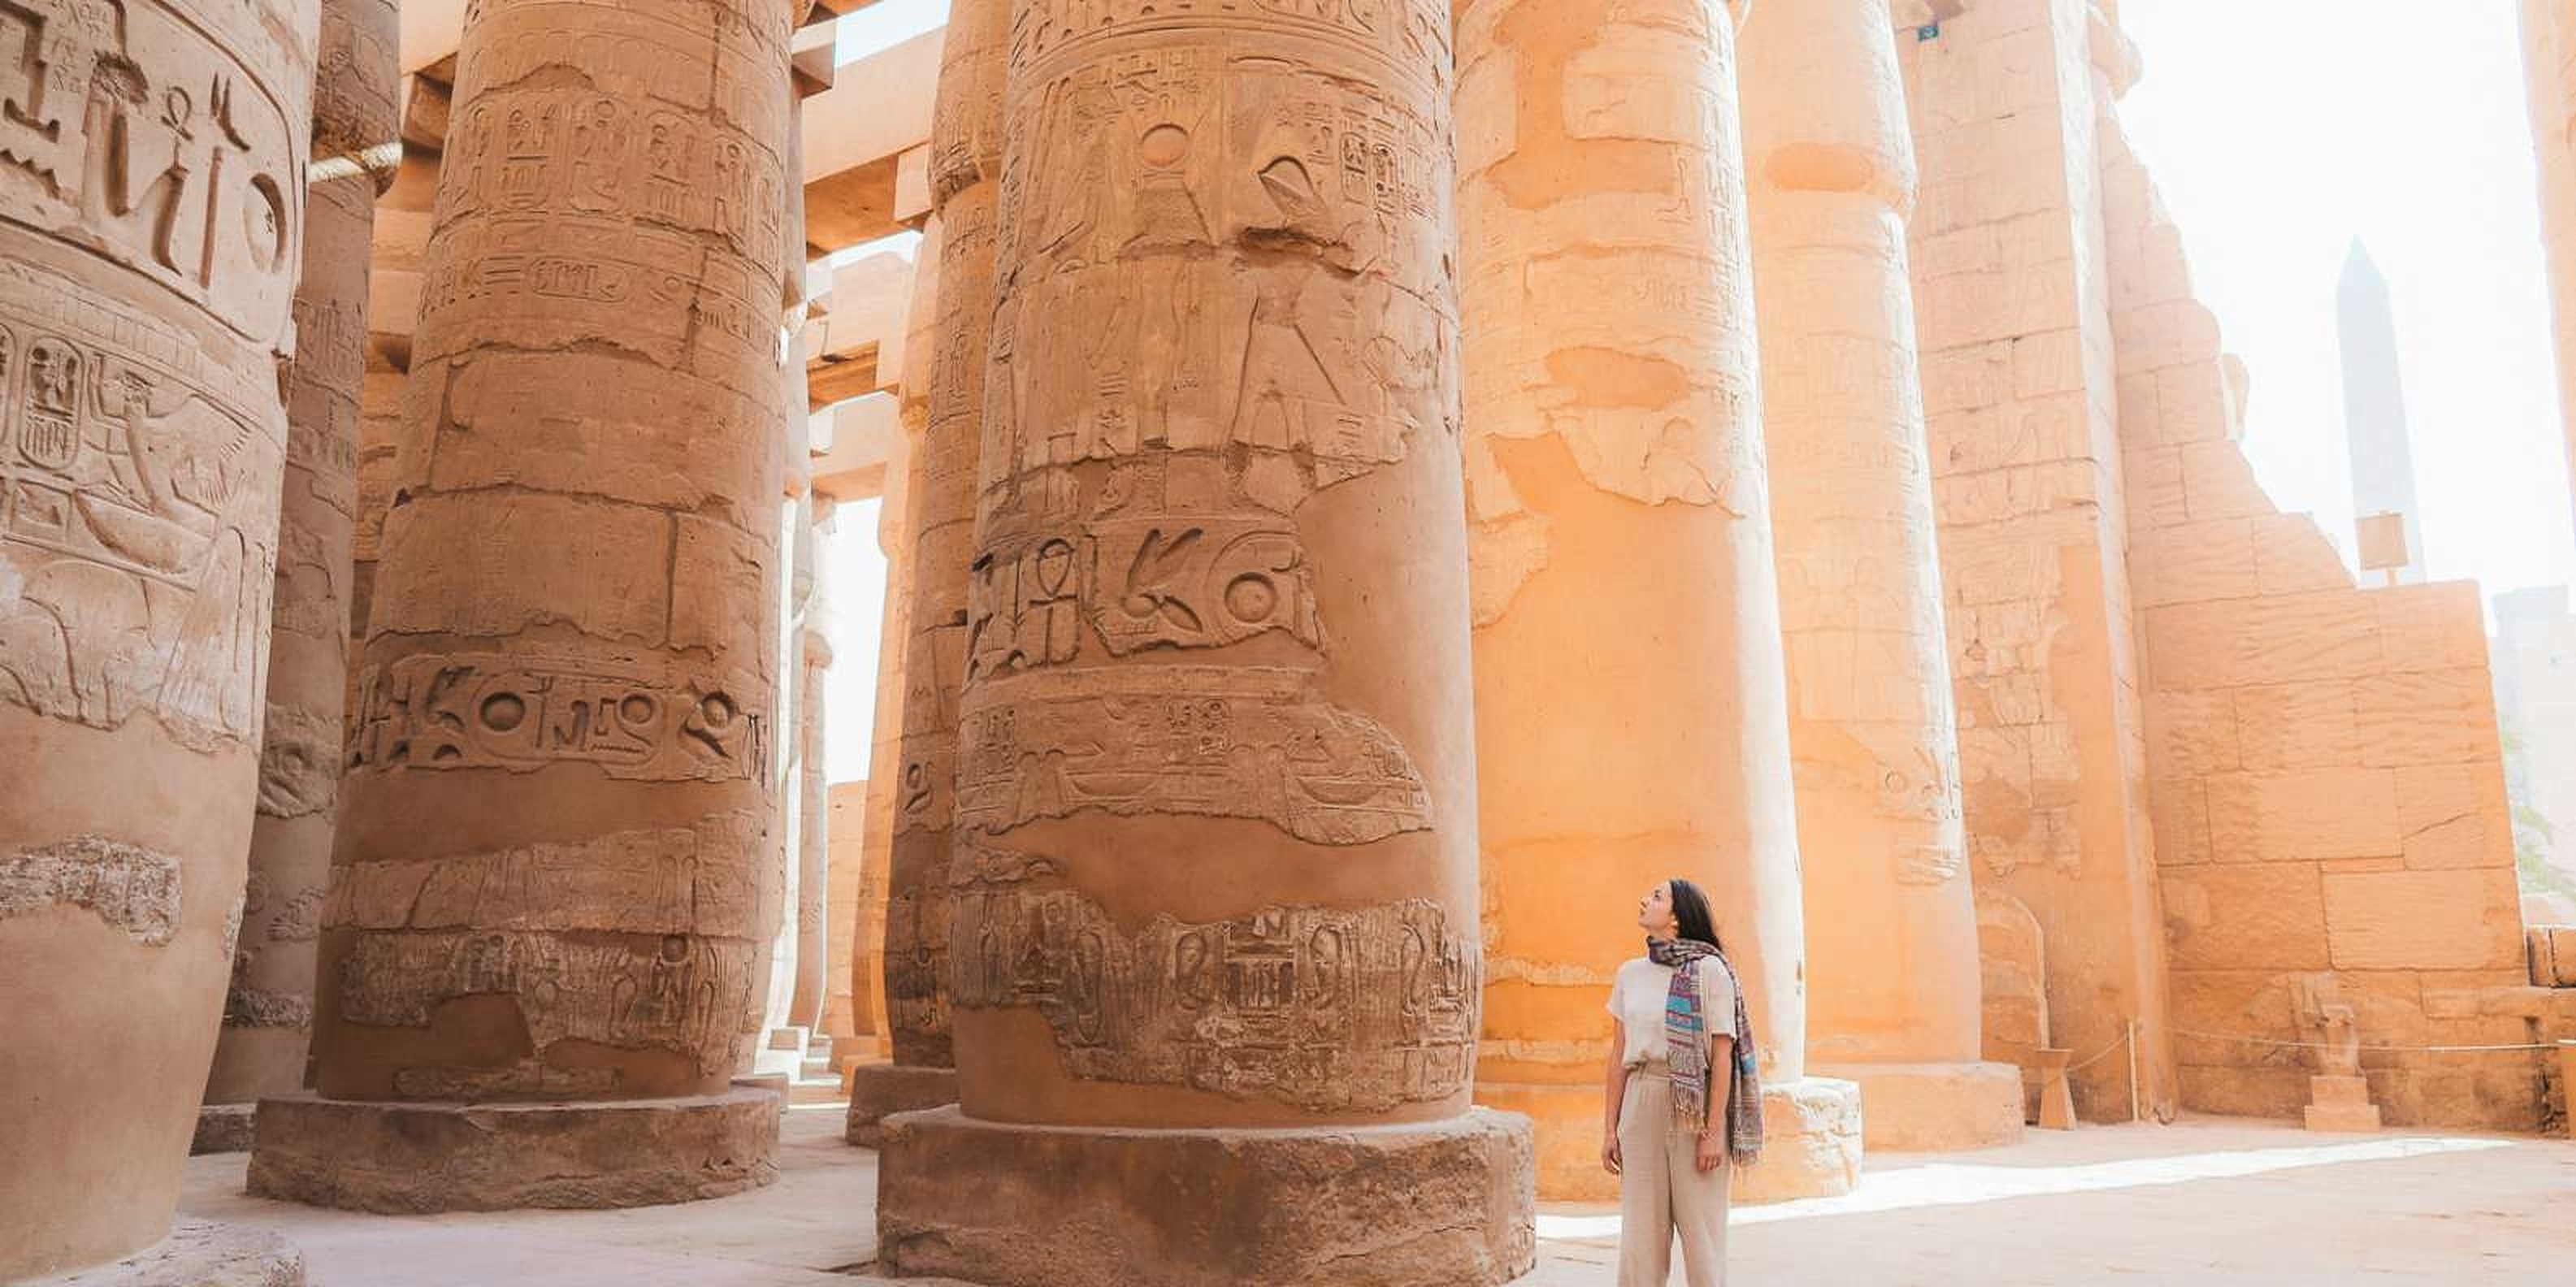 tourhub | Upper Egypt Tours | Pyramids' Best Kept Secrets & Nubian Adventure 